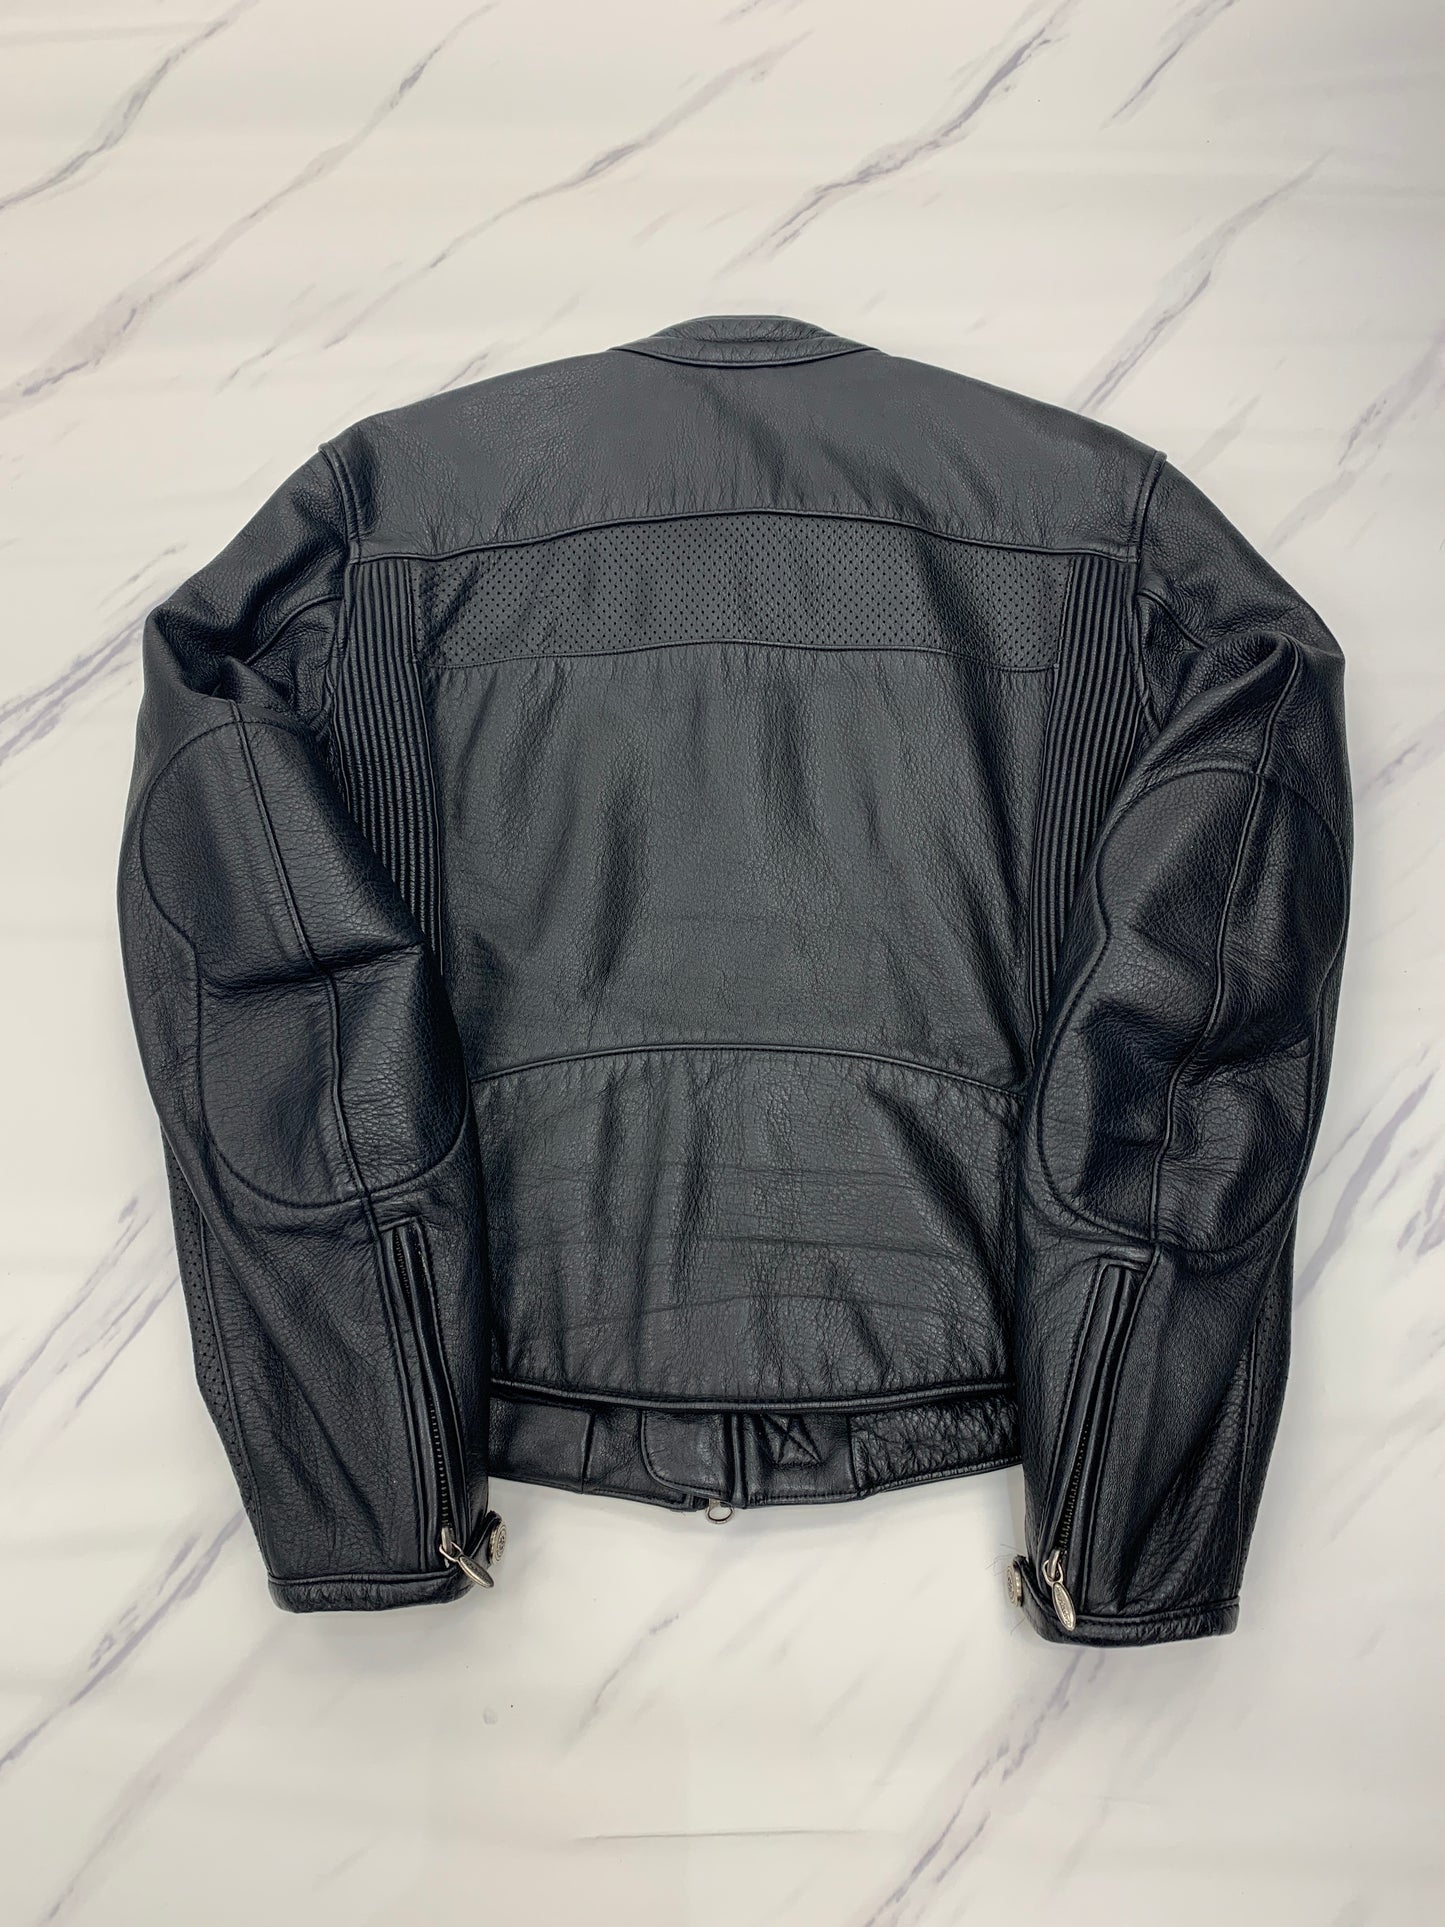 Jacket Leather By Harley Davidson  Size: M